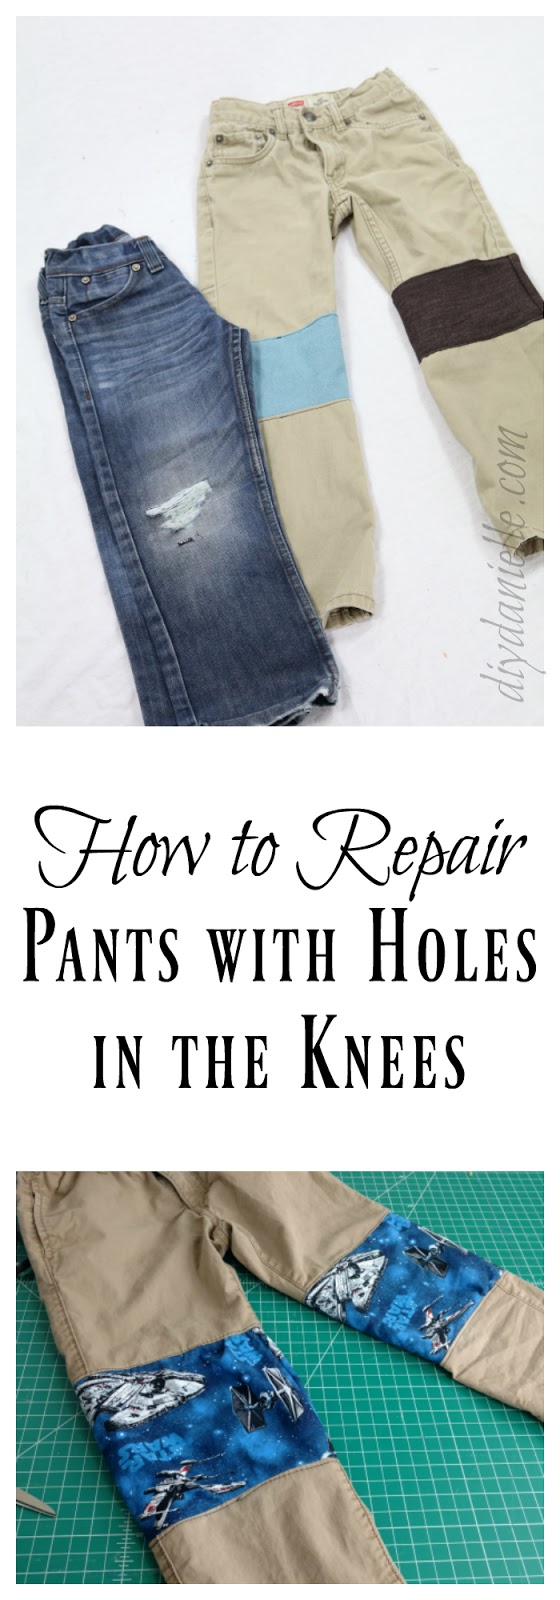 How to Repair Holes in the Knees of Pants | DIY Danielle